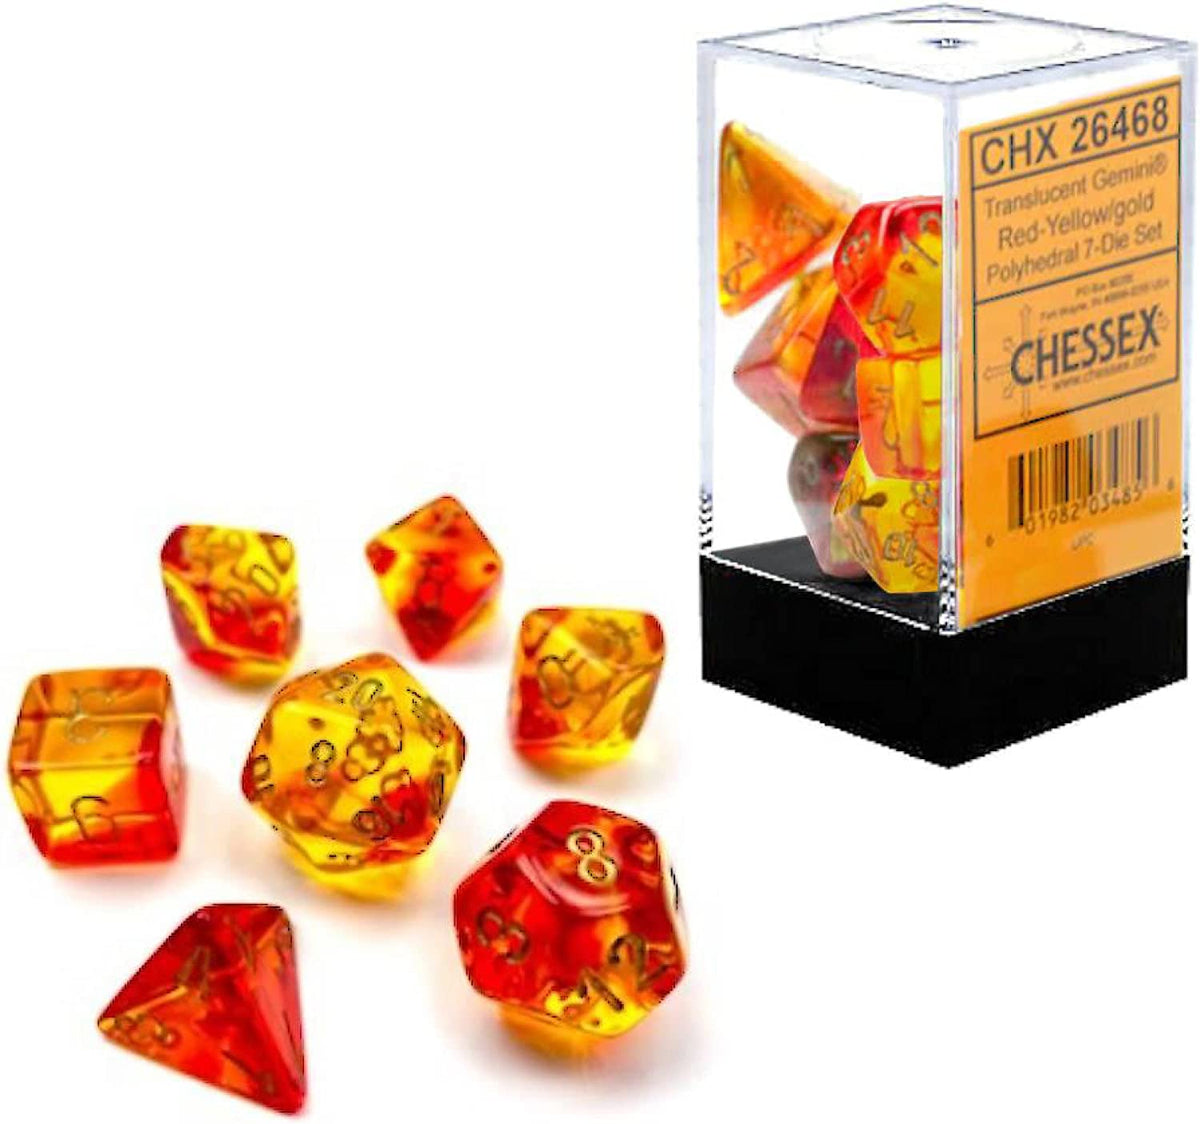 CHX 26468 Gemini Translucent Red-Yellow/Gold Luminary Polyhedral 7-Die Set